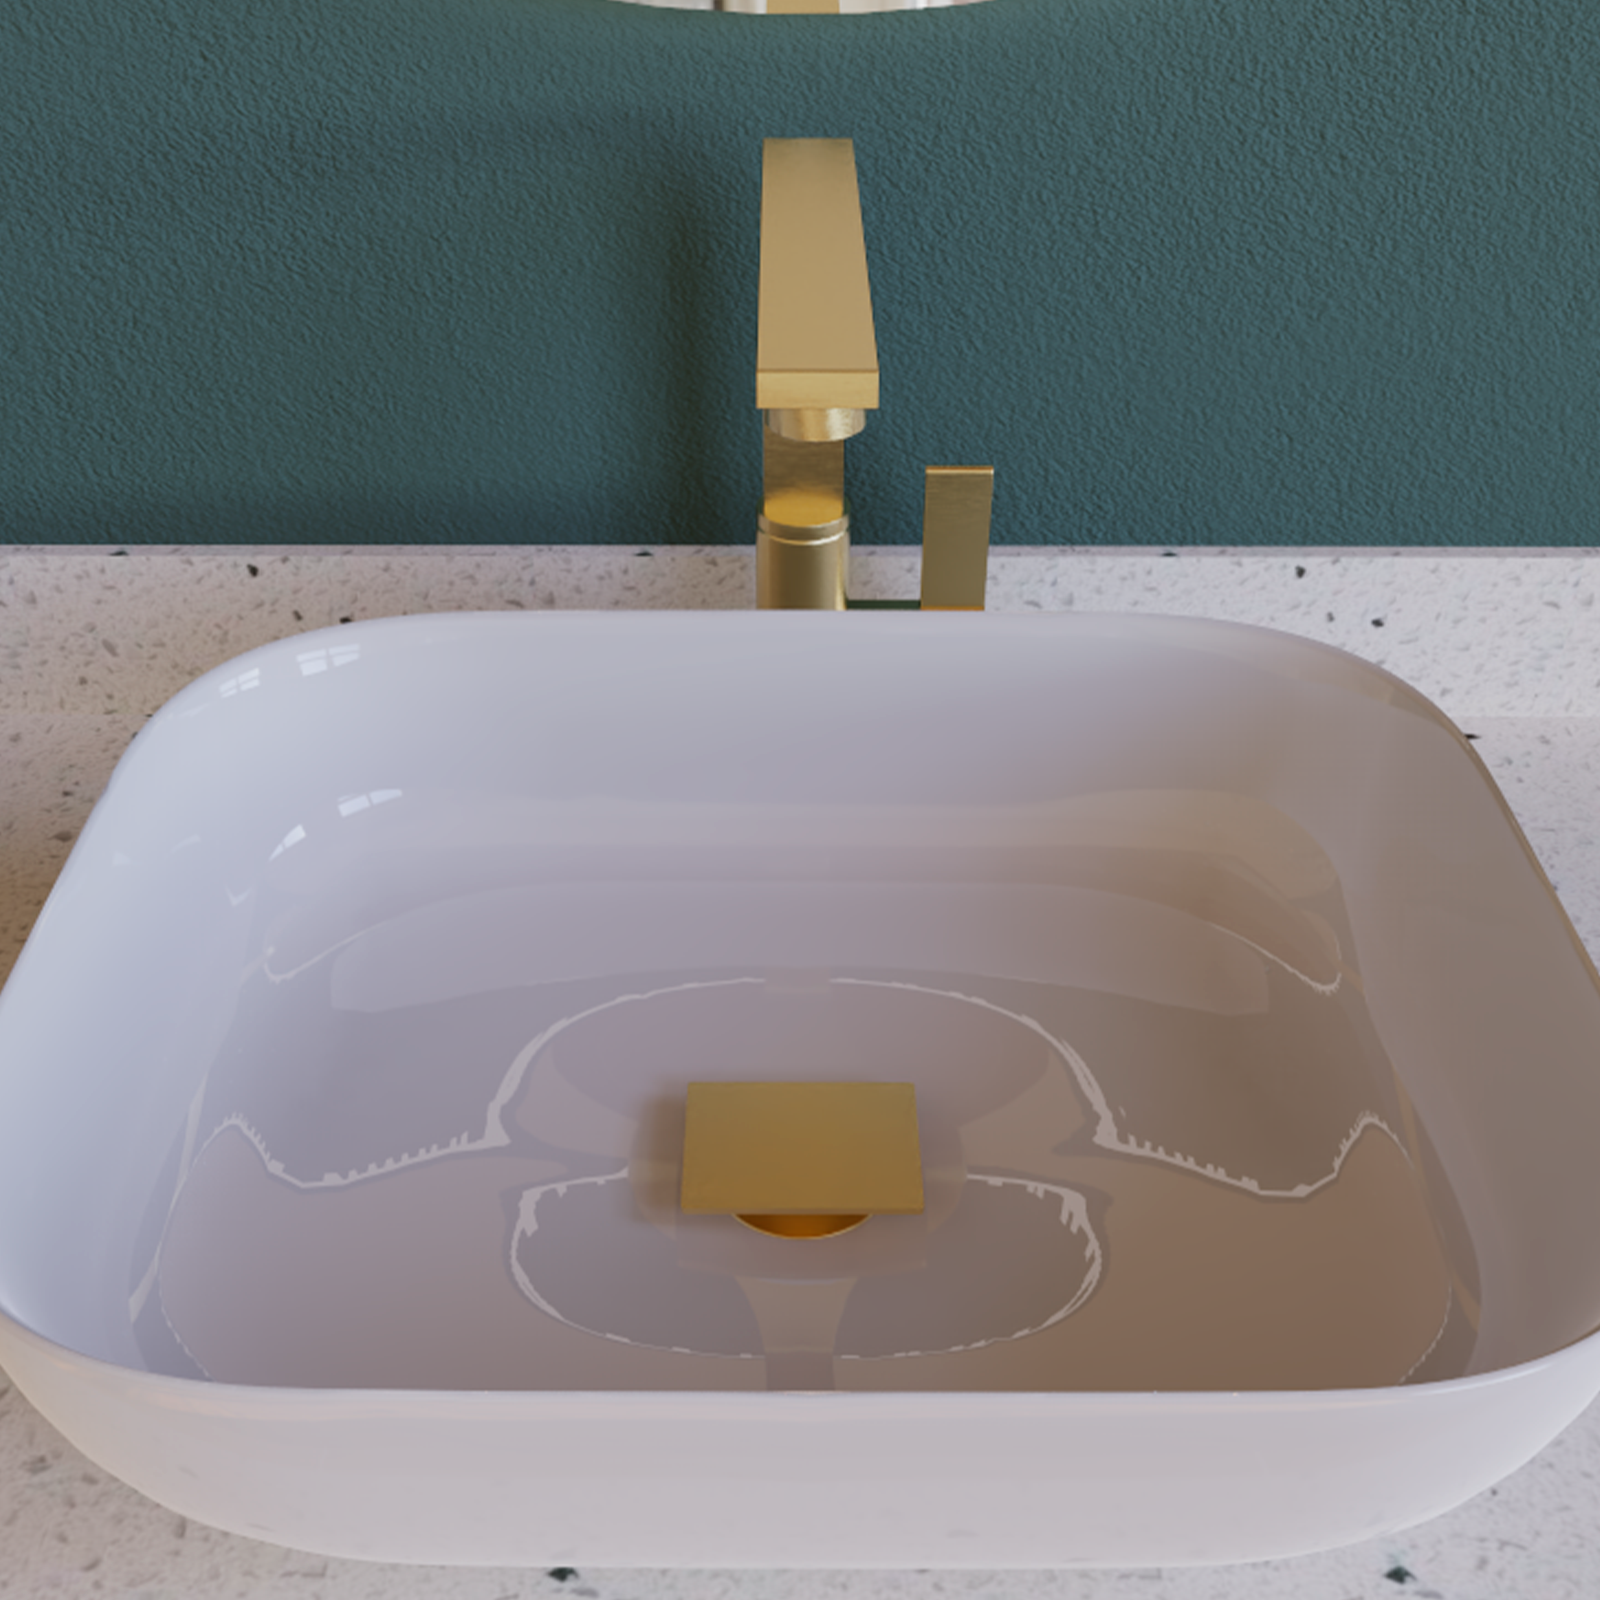 DAX Square Vanity Sink Pop up Drain, Brass Body, 8-7/8 x 2-5/8 Inches (DAX-82013)